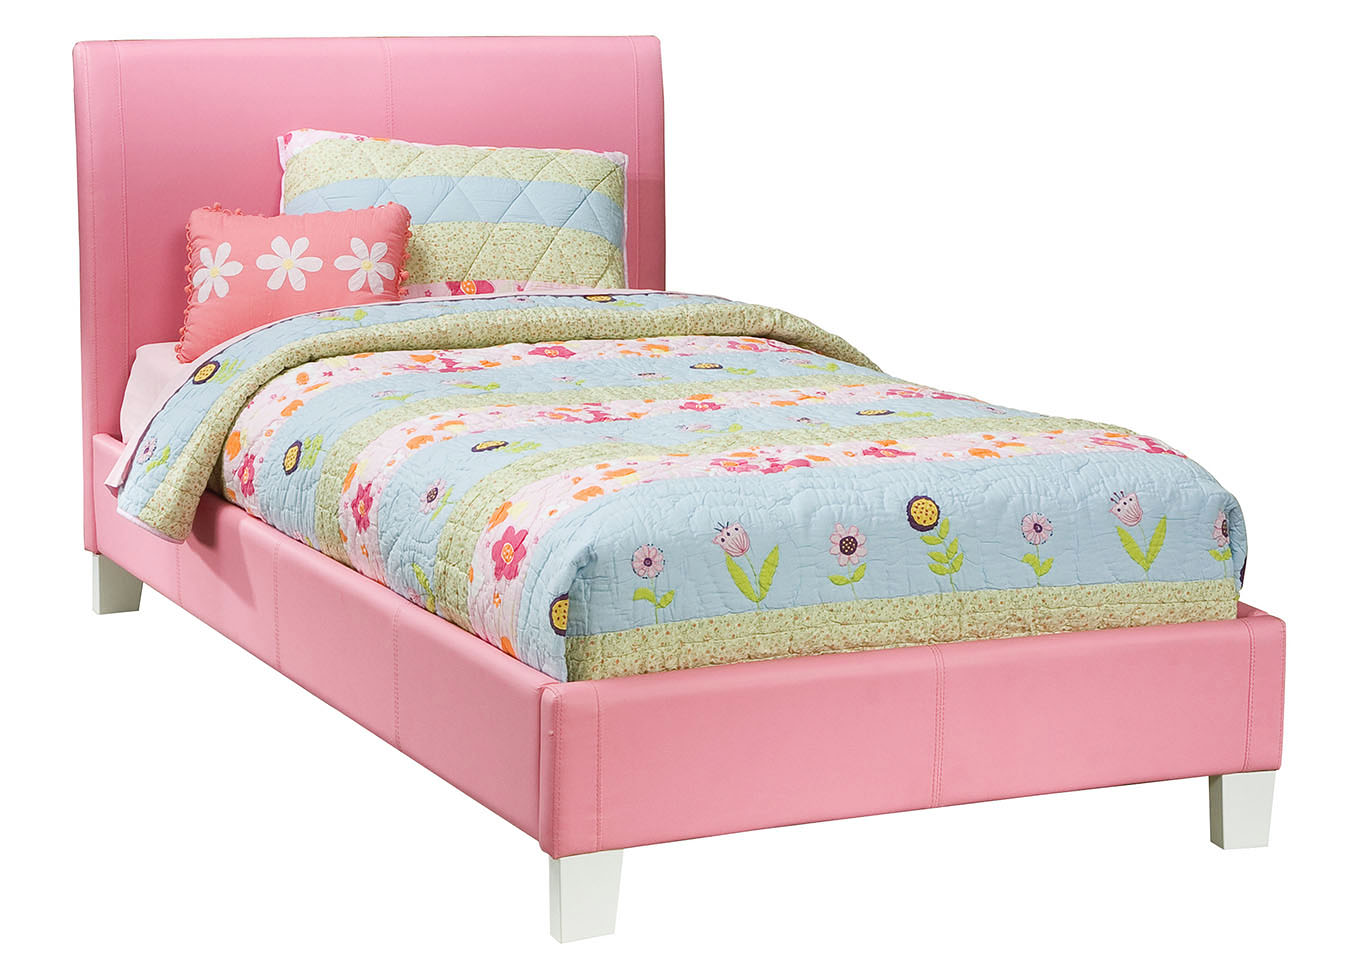 Fantasia Pink Full Upholstered Bed,Standard